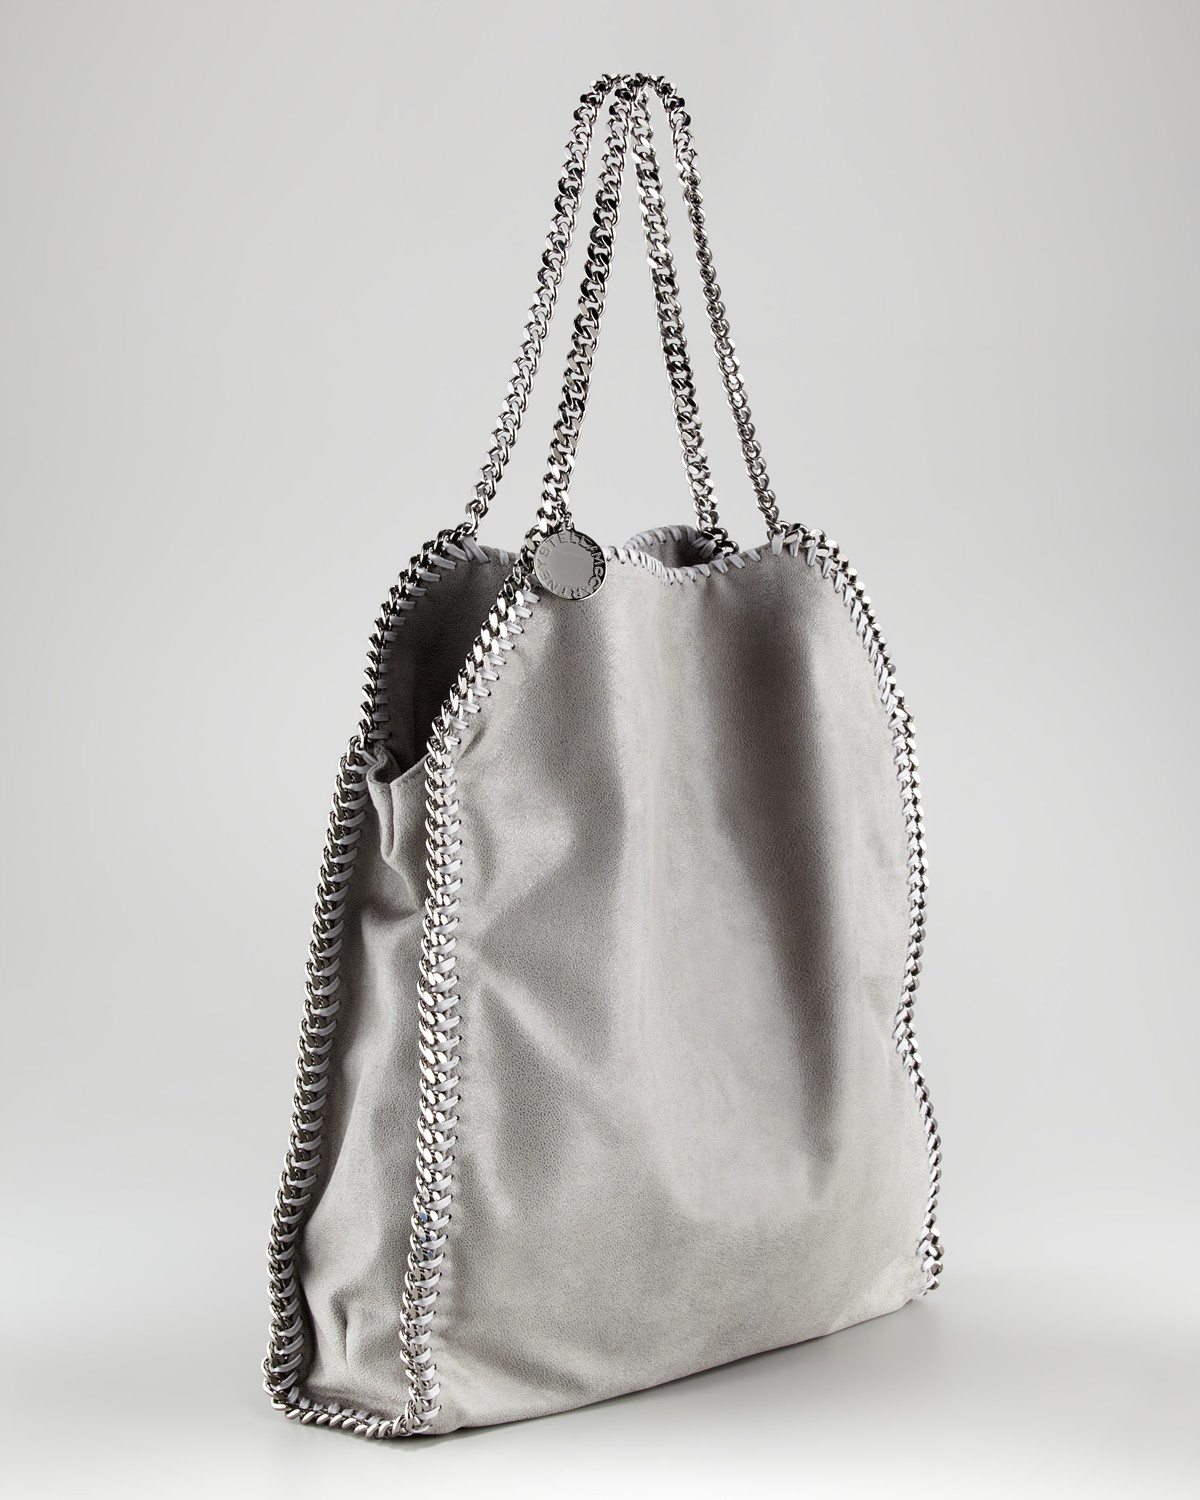 Stella Mccartney Falabella Large Tote Bag | The Art of Mike Mignola